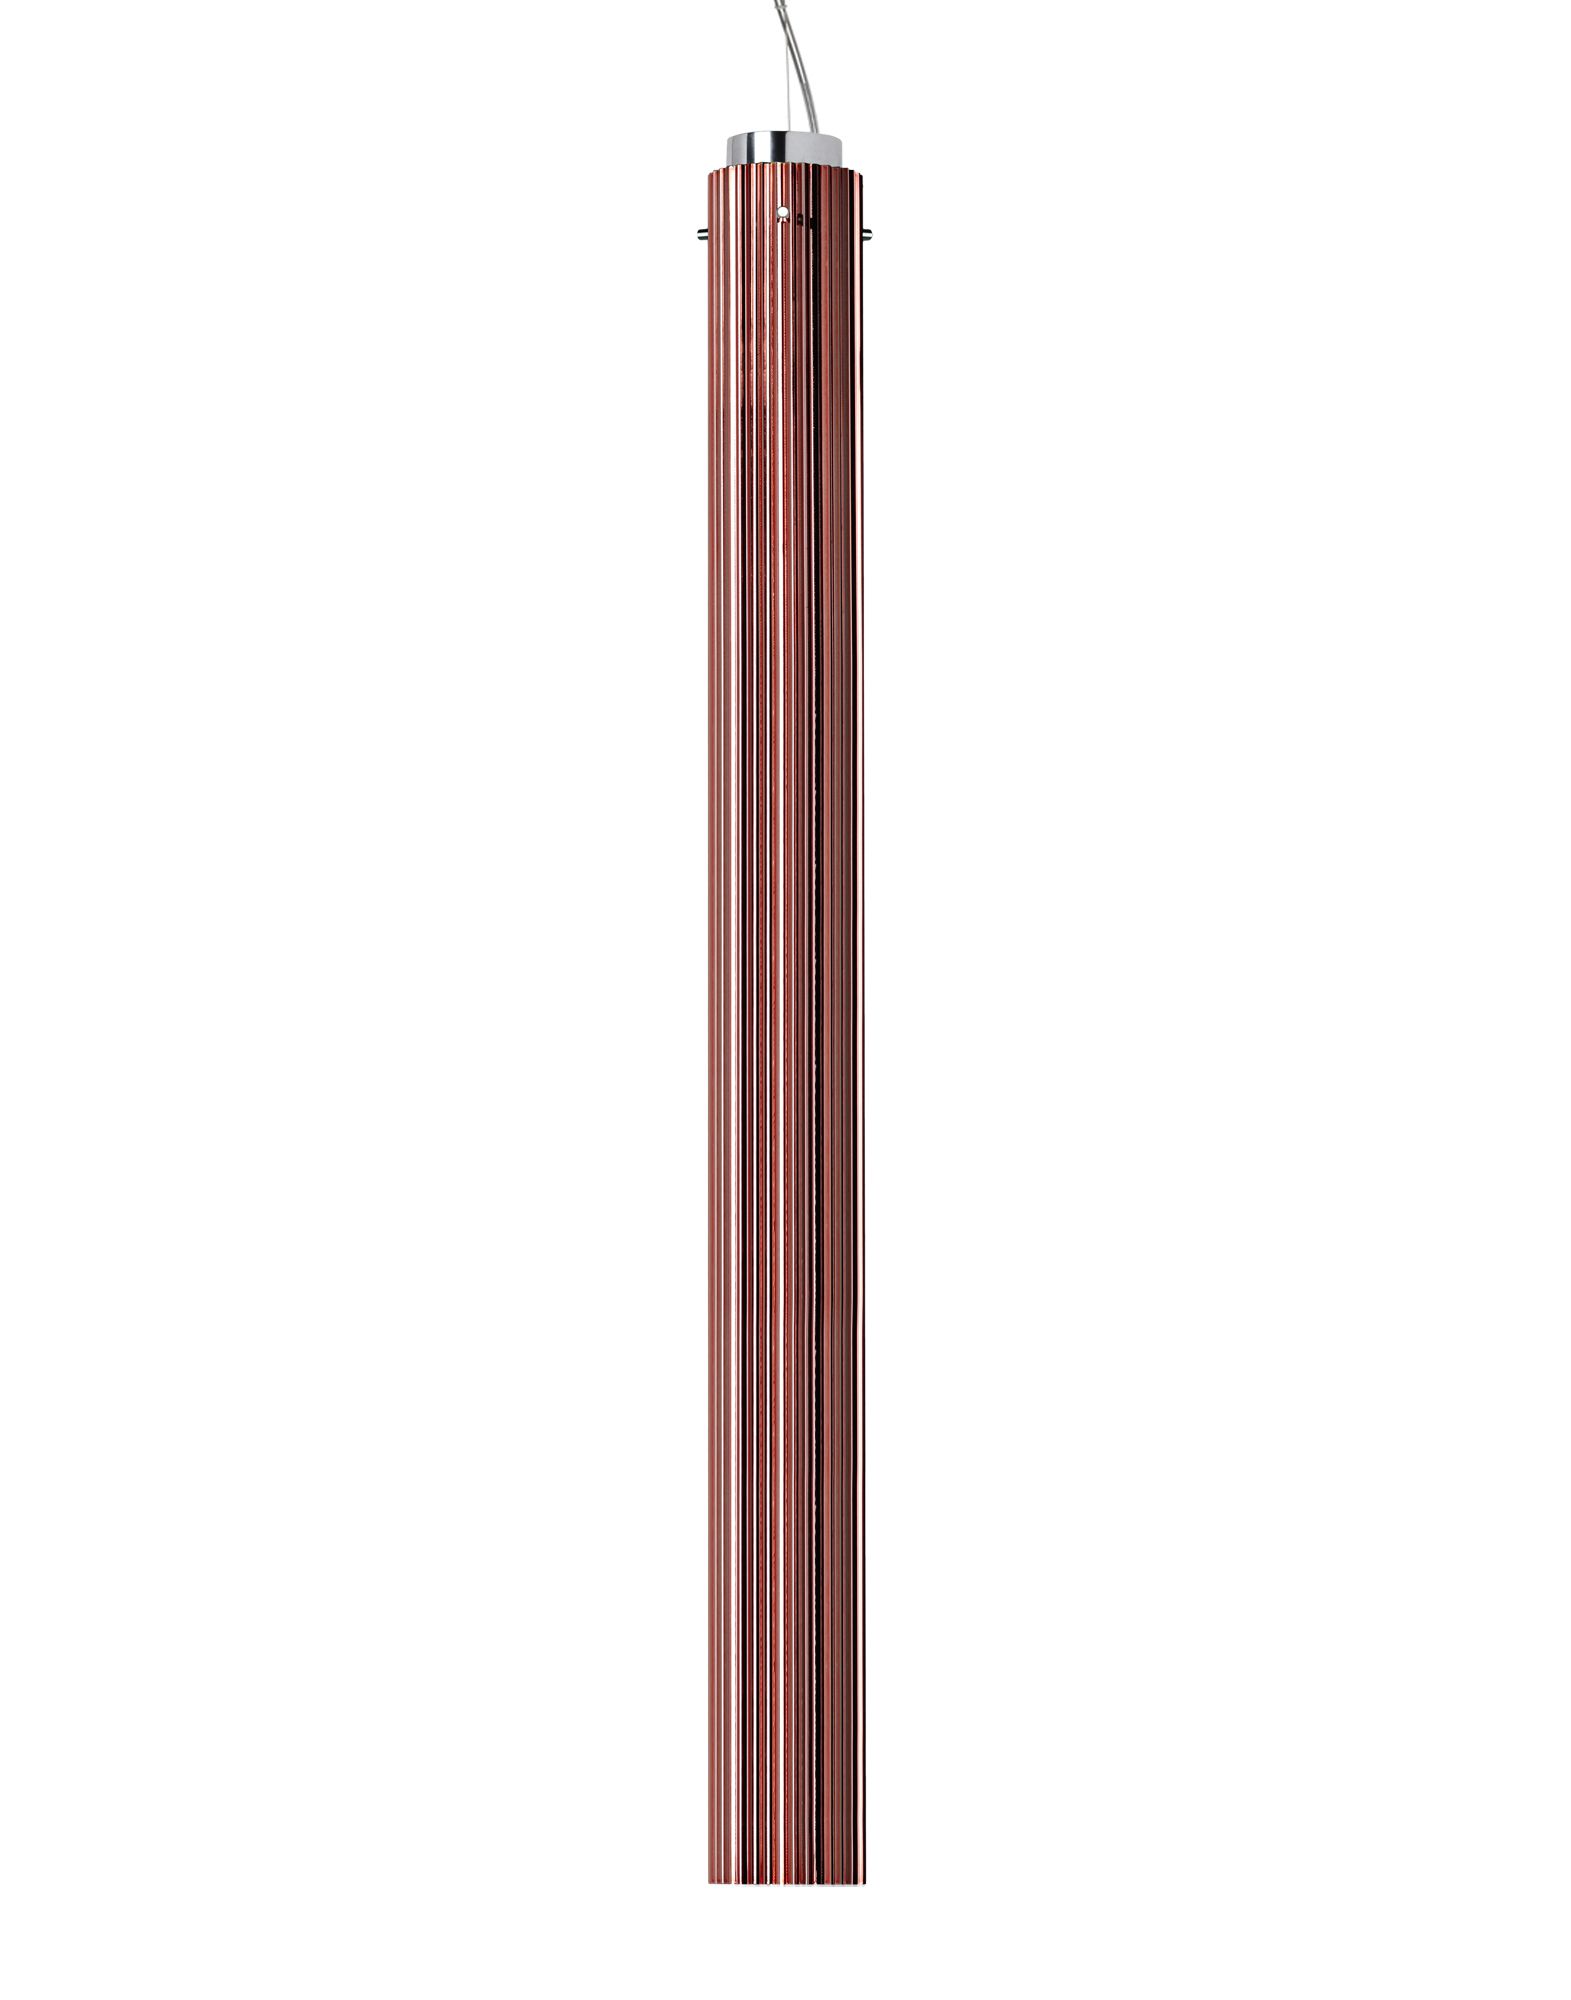 Suspensie Kartell by Laufen Rifly design Ludovica & Roberto Palomba LED 10W h90cm cupru metalizat Kartell by Laufen